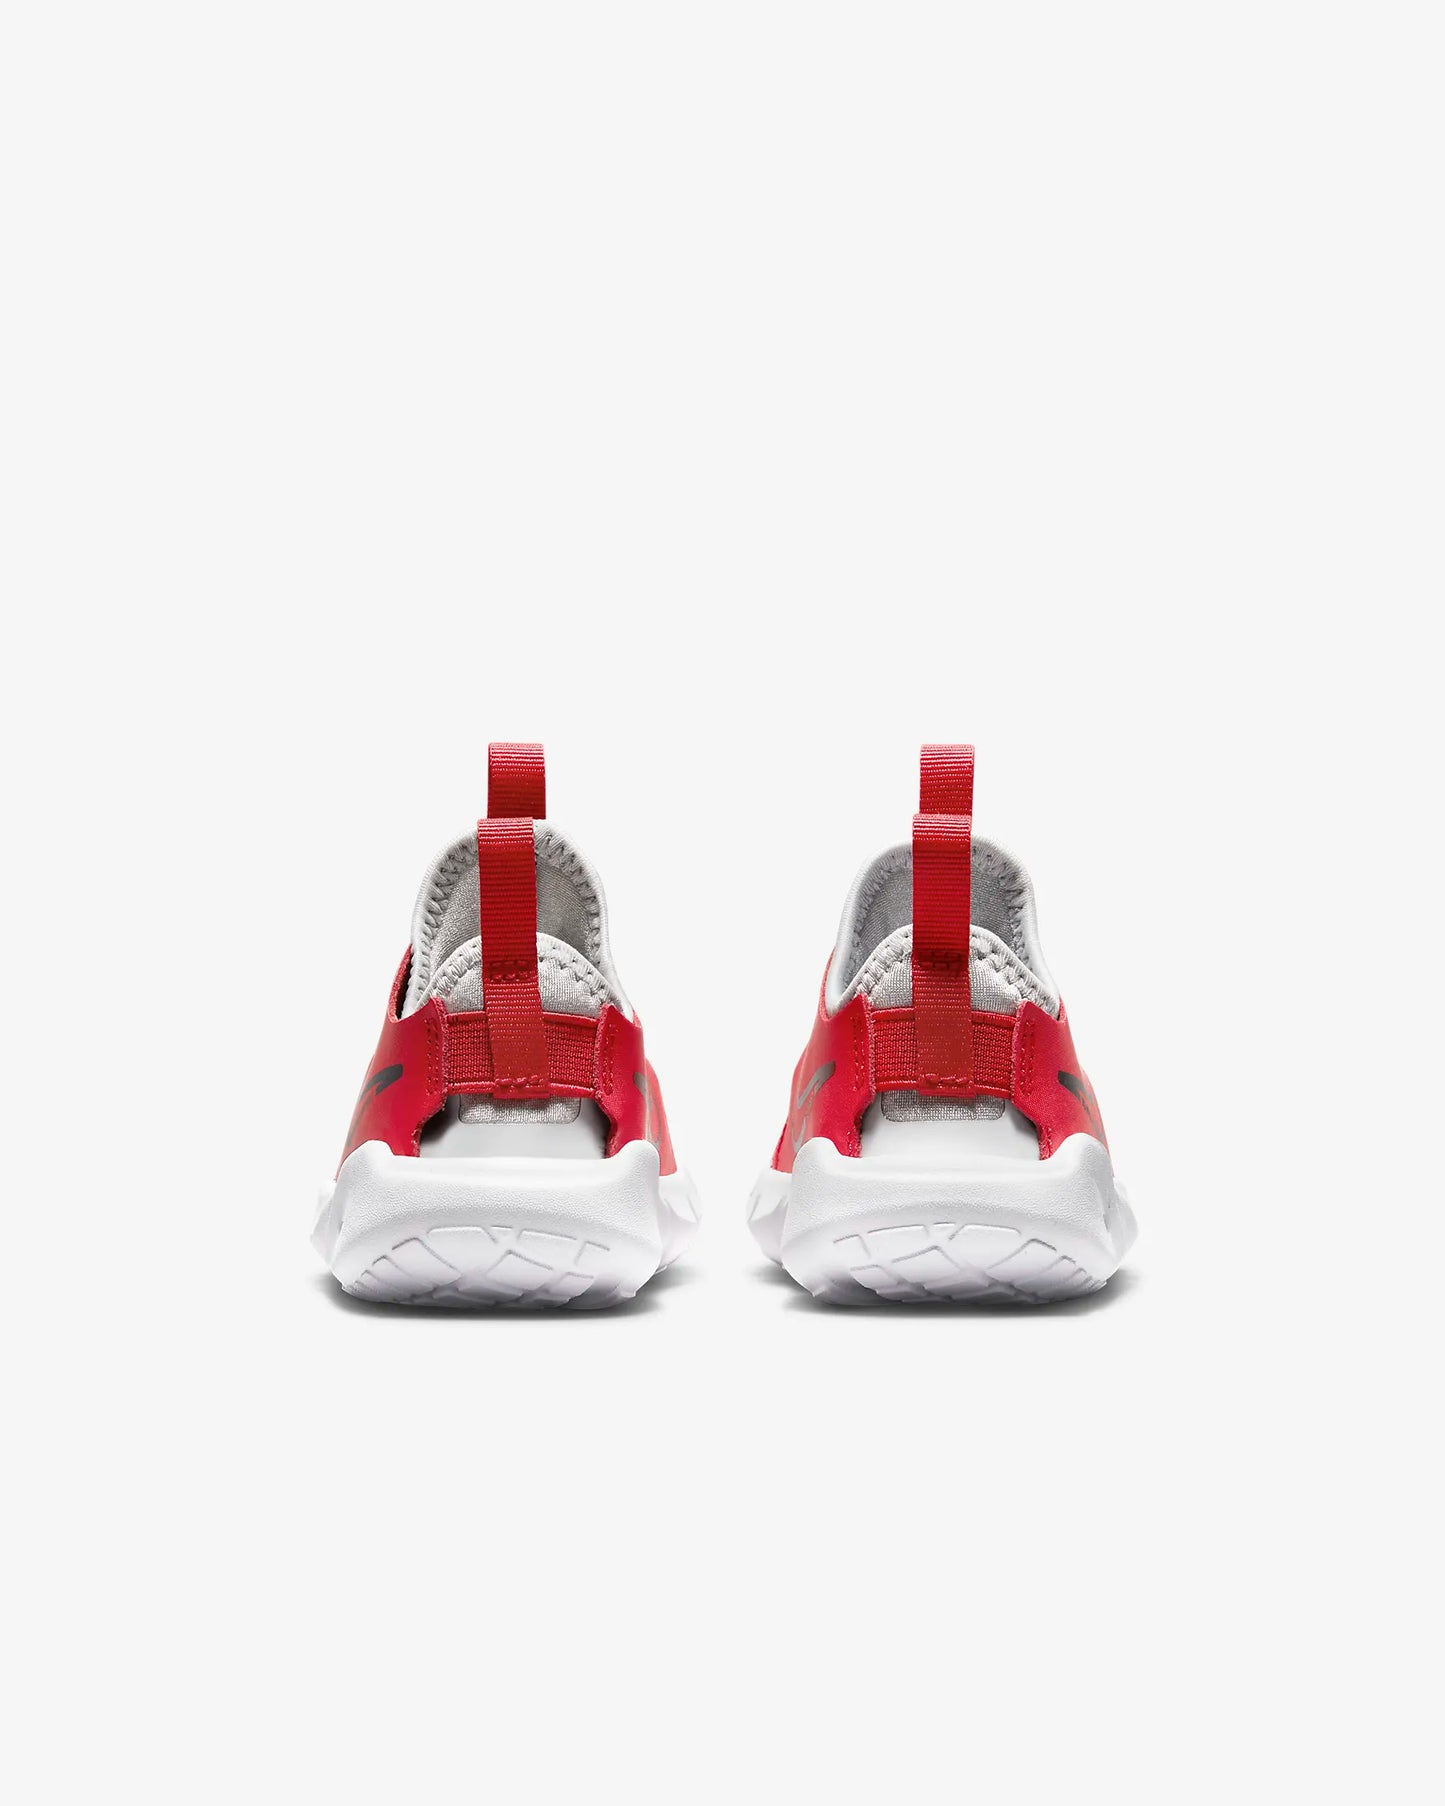 Zapatillas para bebé Nike Flex Runner 2